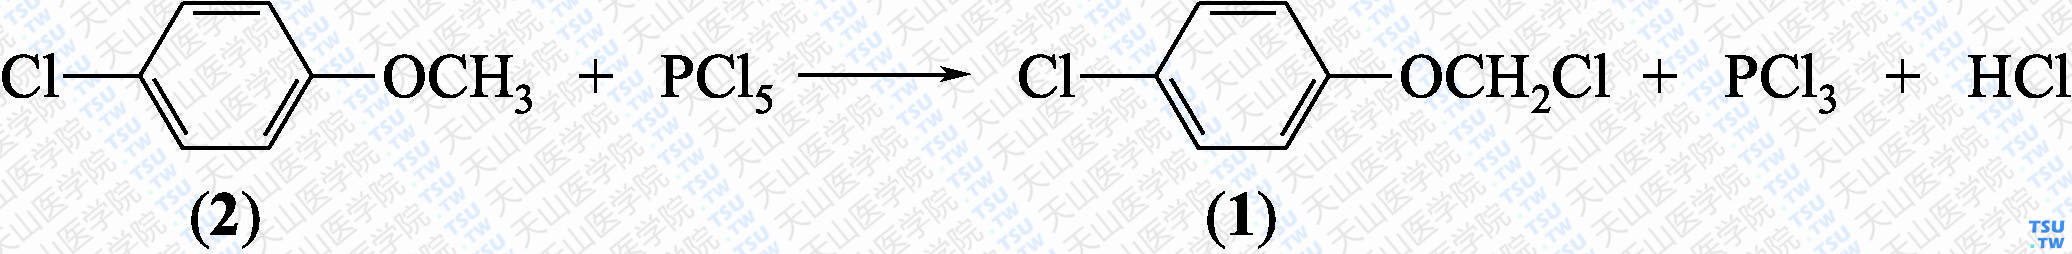 对氯苯氧甲基氯（分子式：C<sub>7</sub>H<sub>6</sub>Cl<sub>2</sub>O）的合成方法路线及其结构式